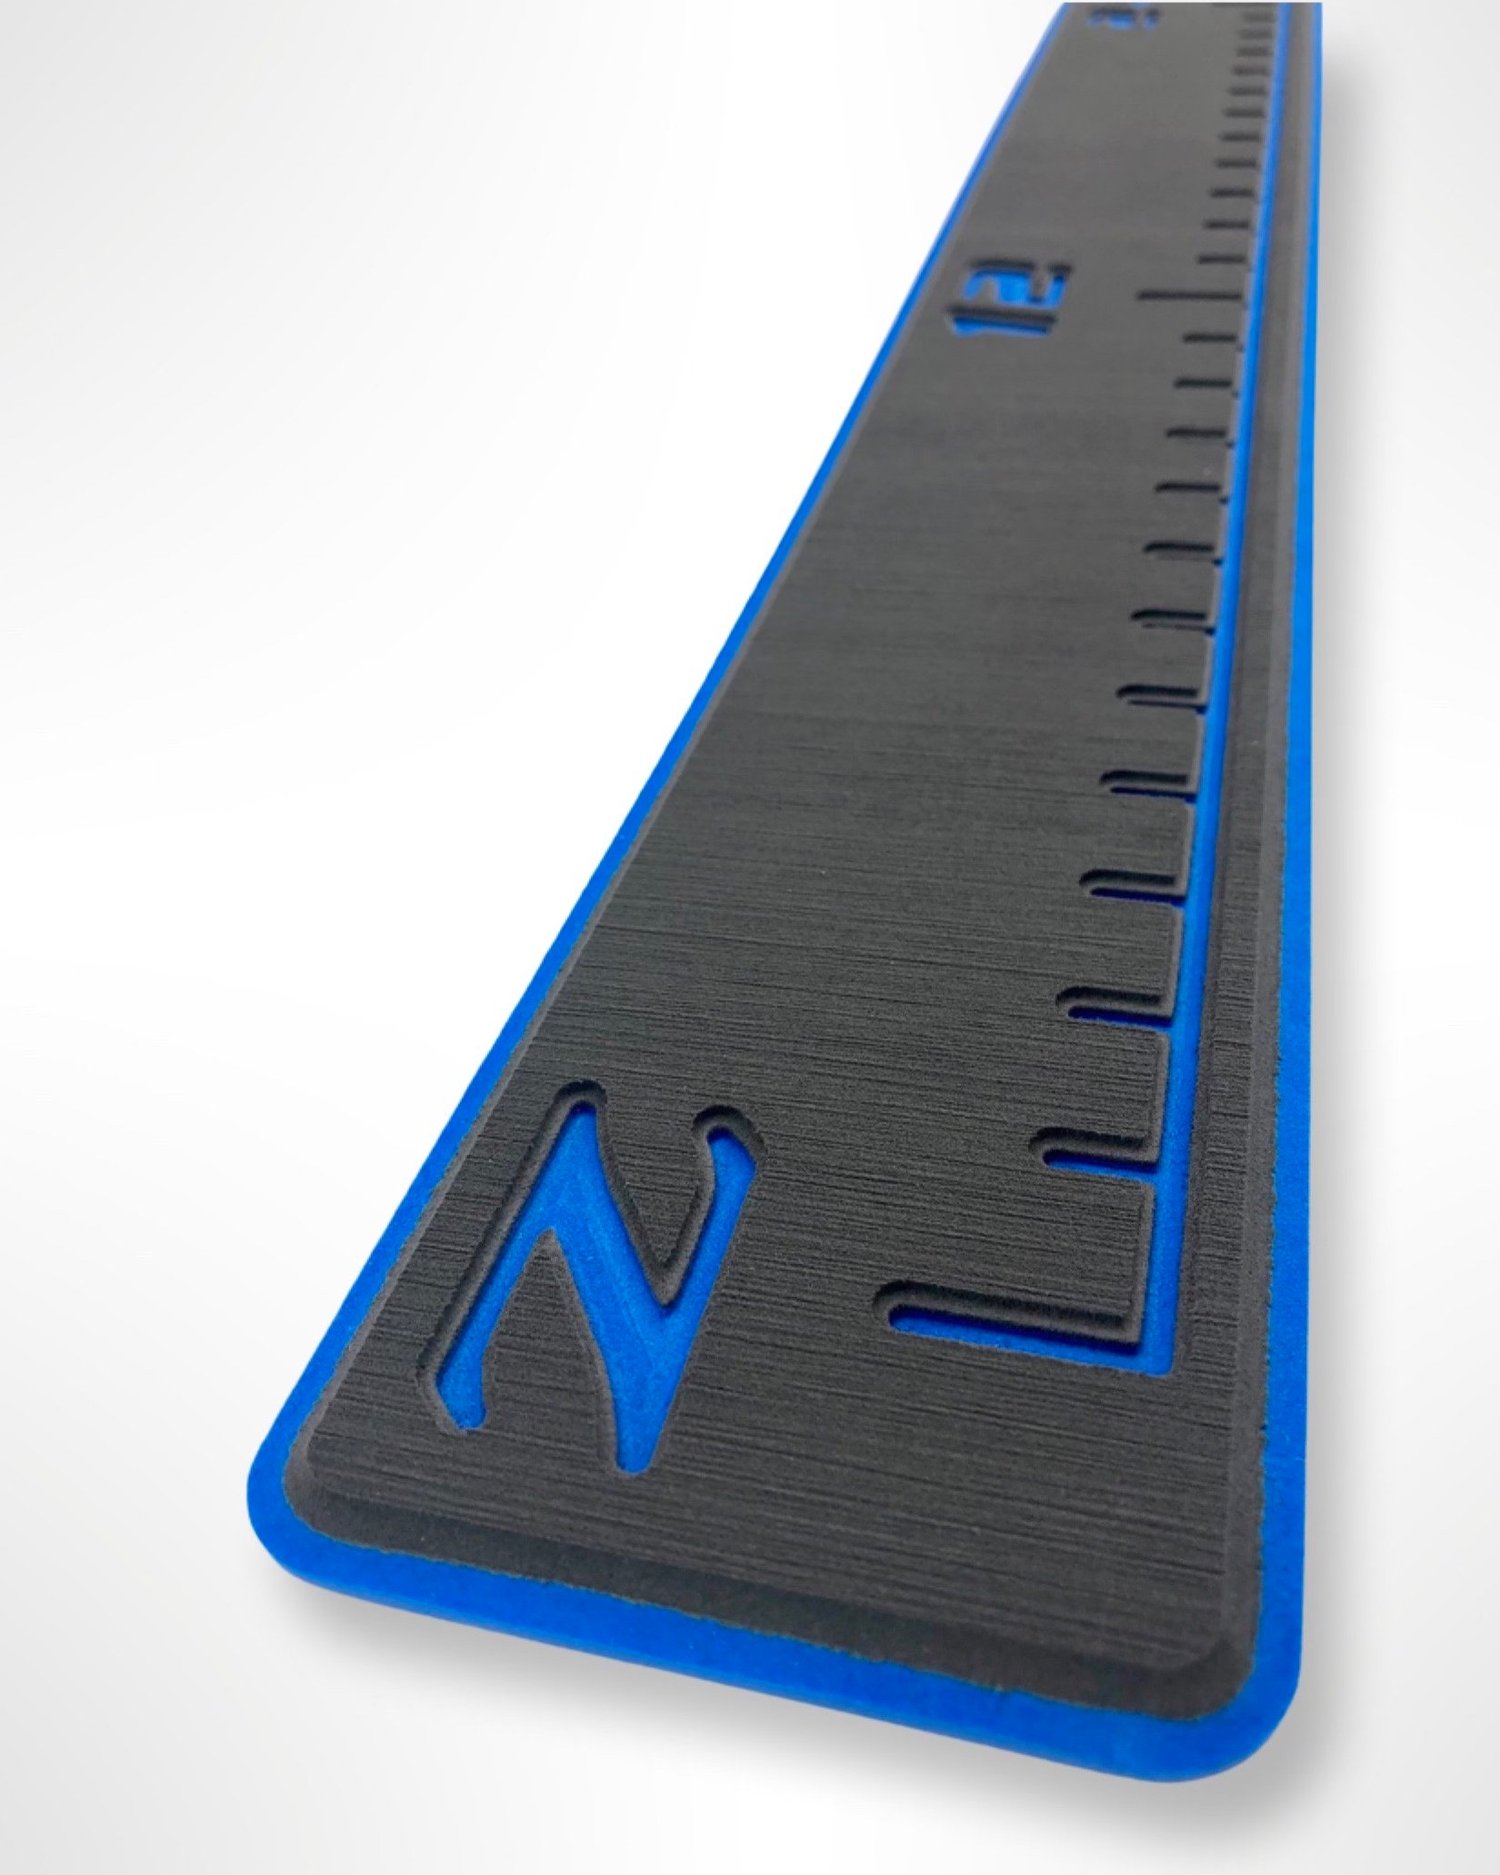 Fishing Ruler | Measuring Stick |3M|Marine Eva Foam 36 Inch, Made in USA|  Boat